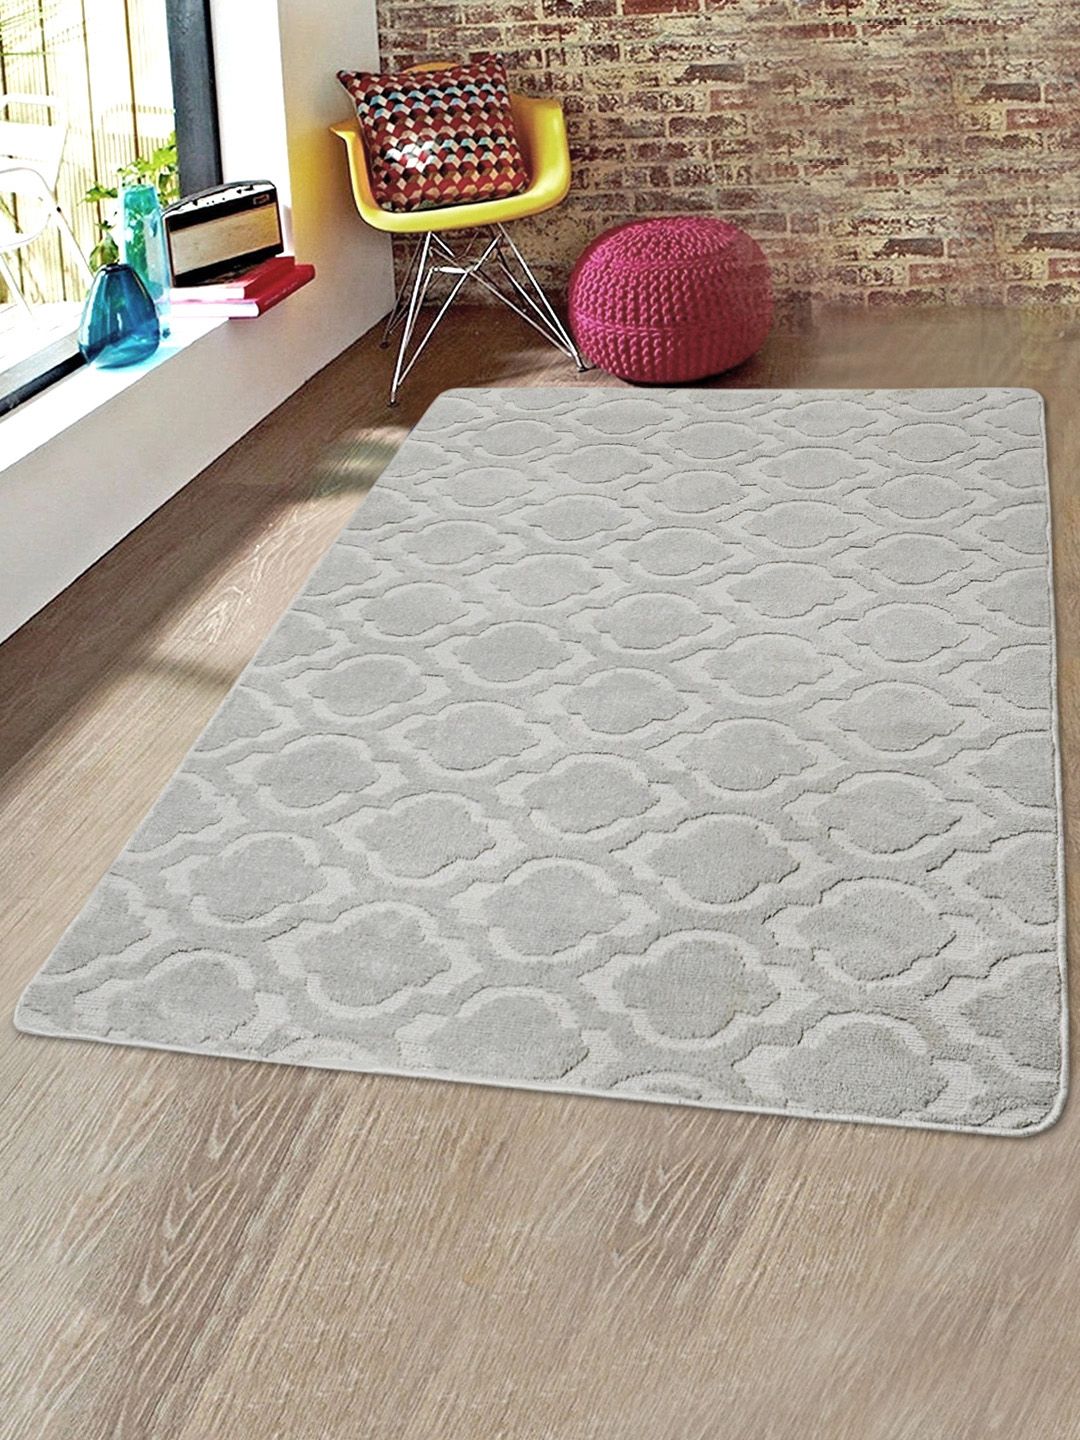 Saral Home Grey Solid Microfiber Anti-Skid Carpet Price in India